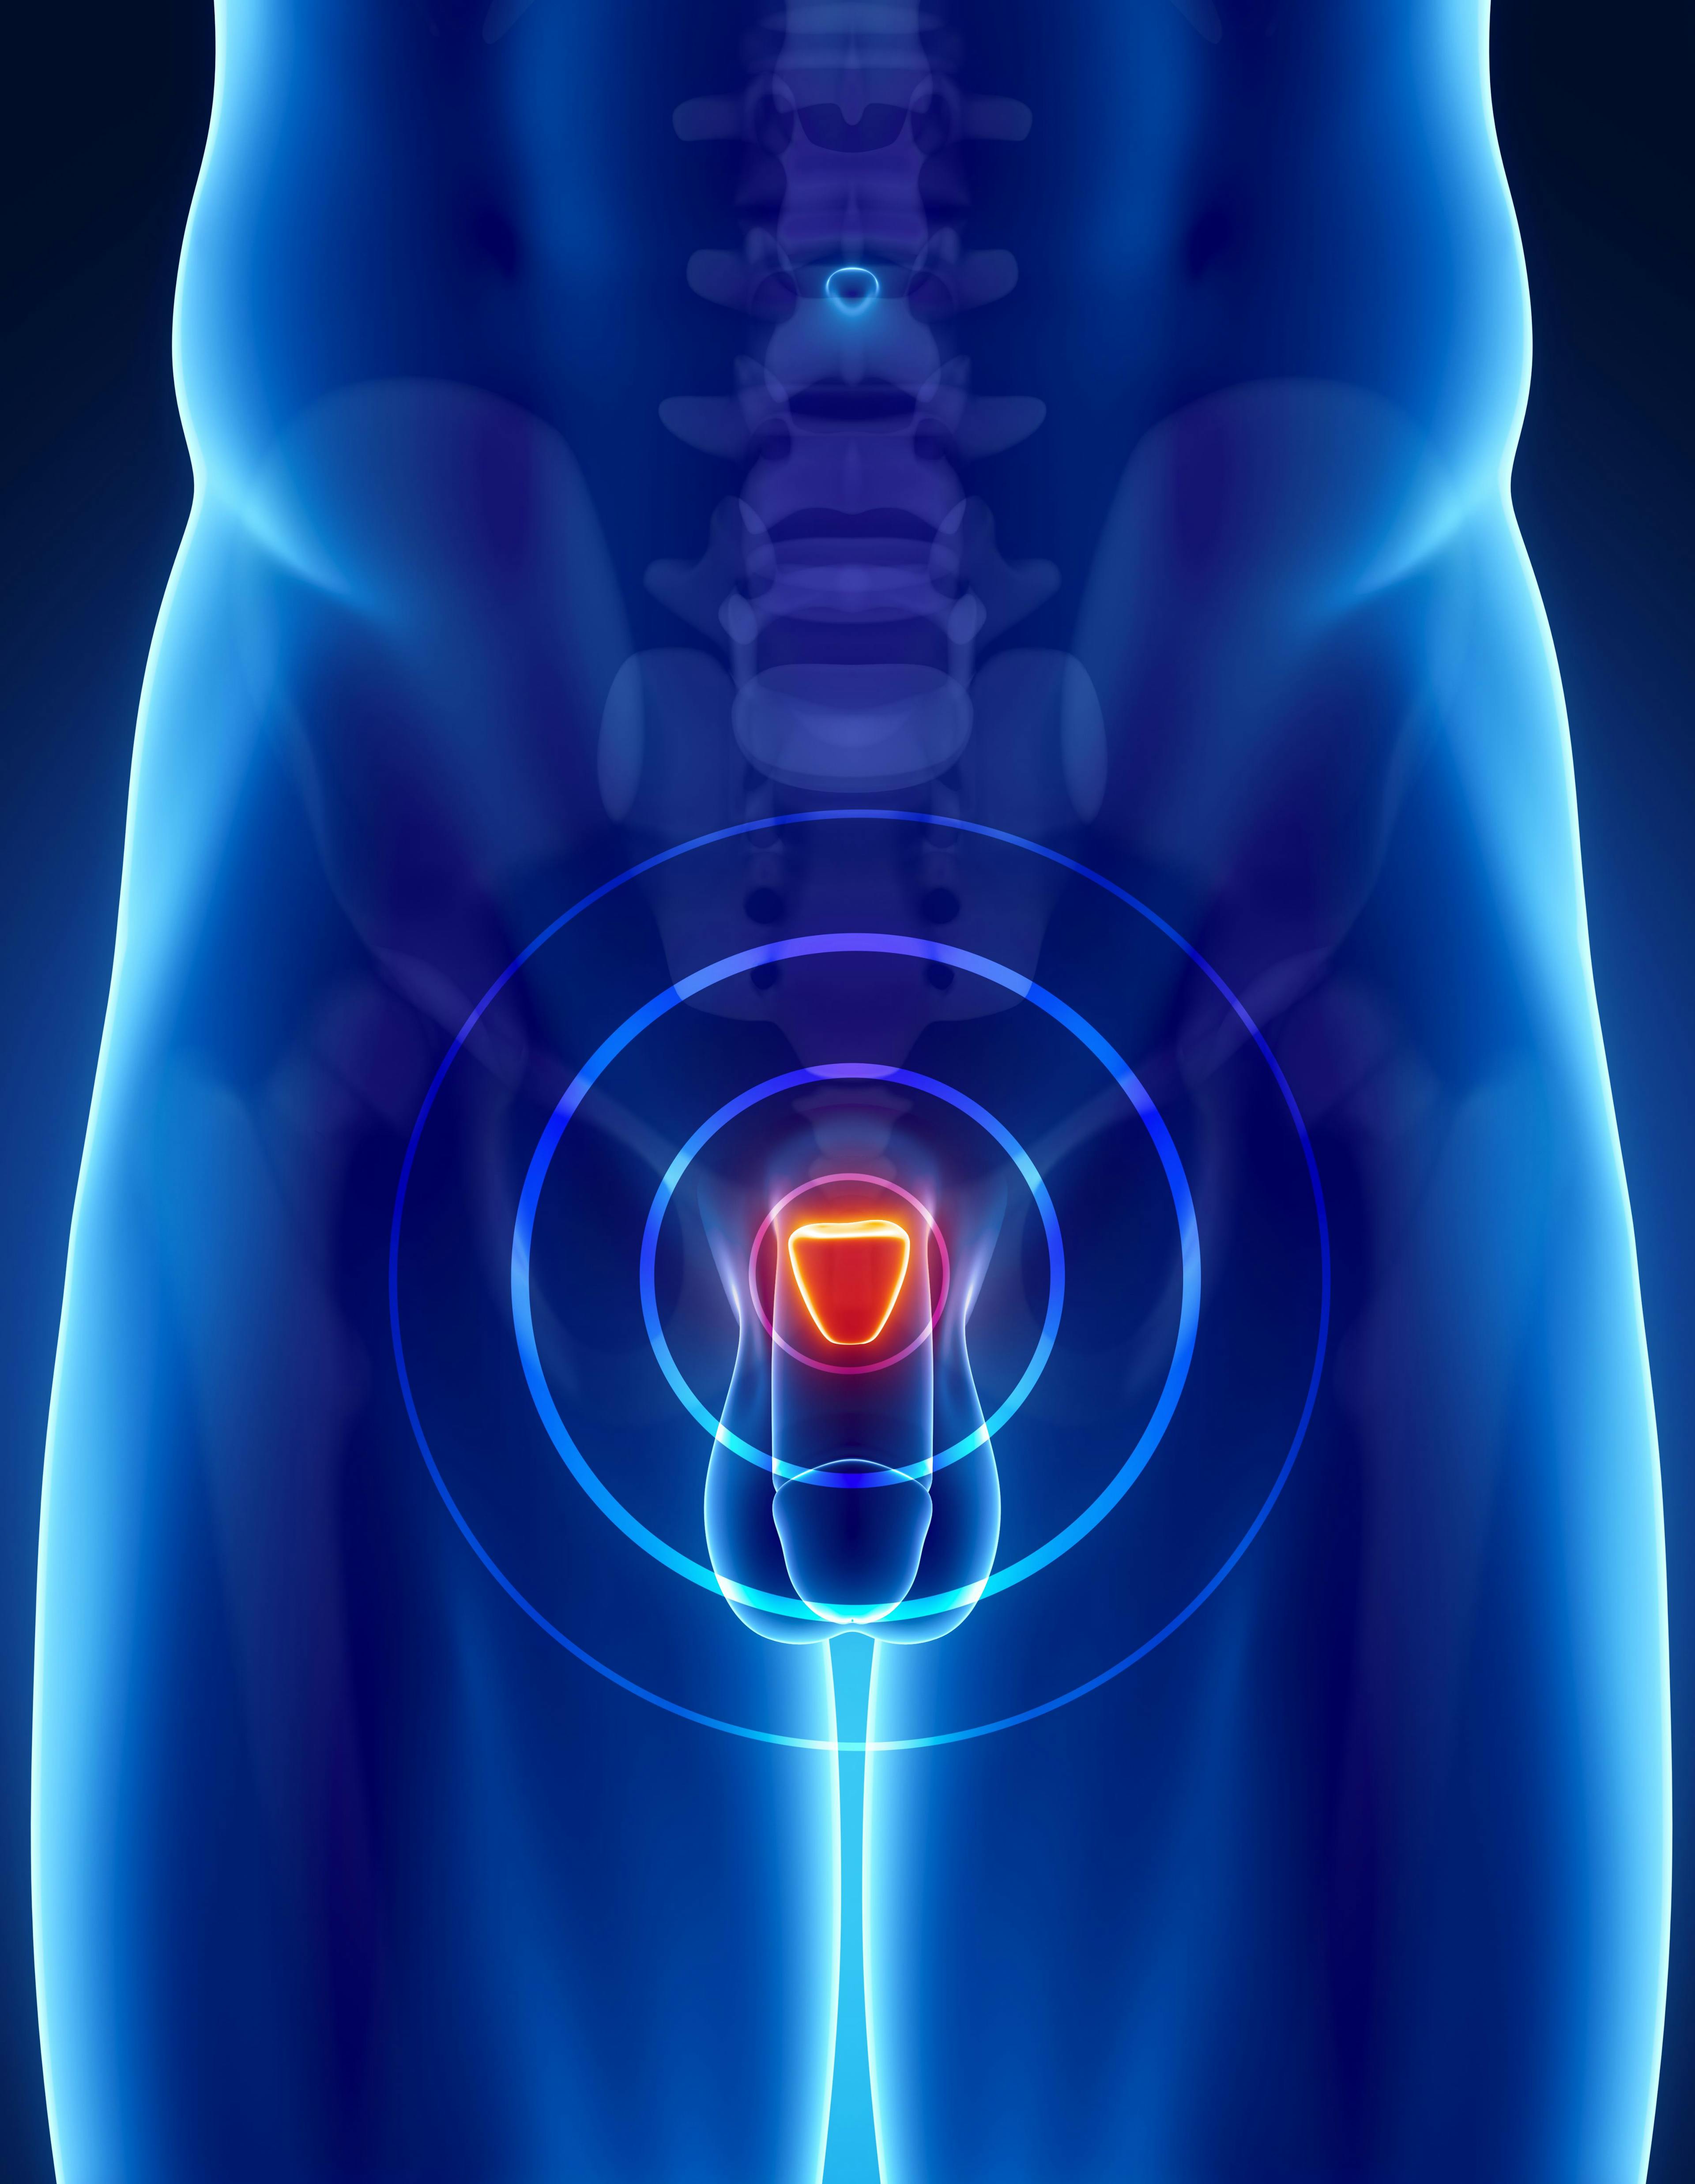 PET Radiotracer Boosts Survival in Postprostatectomy Salvage Radiotherapy